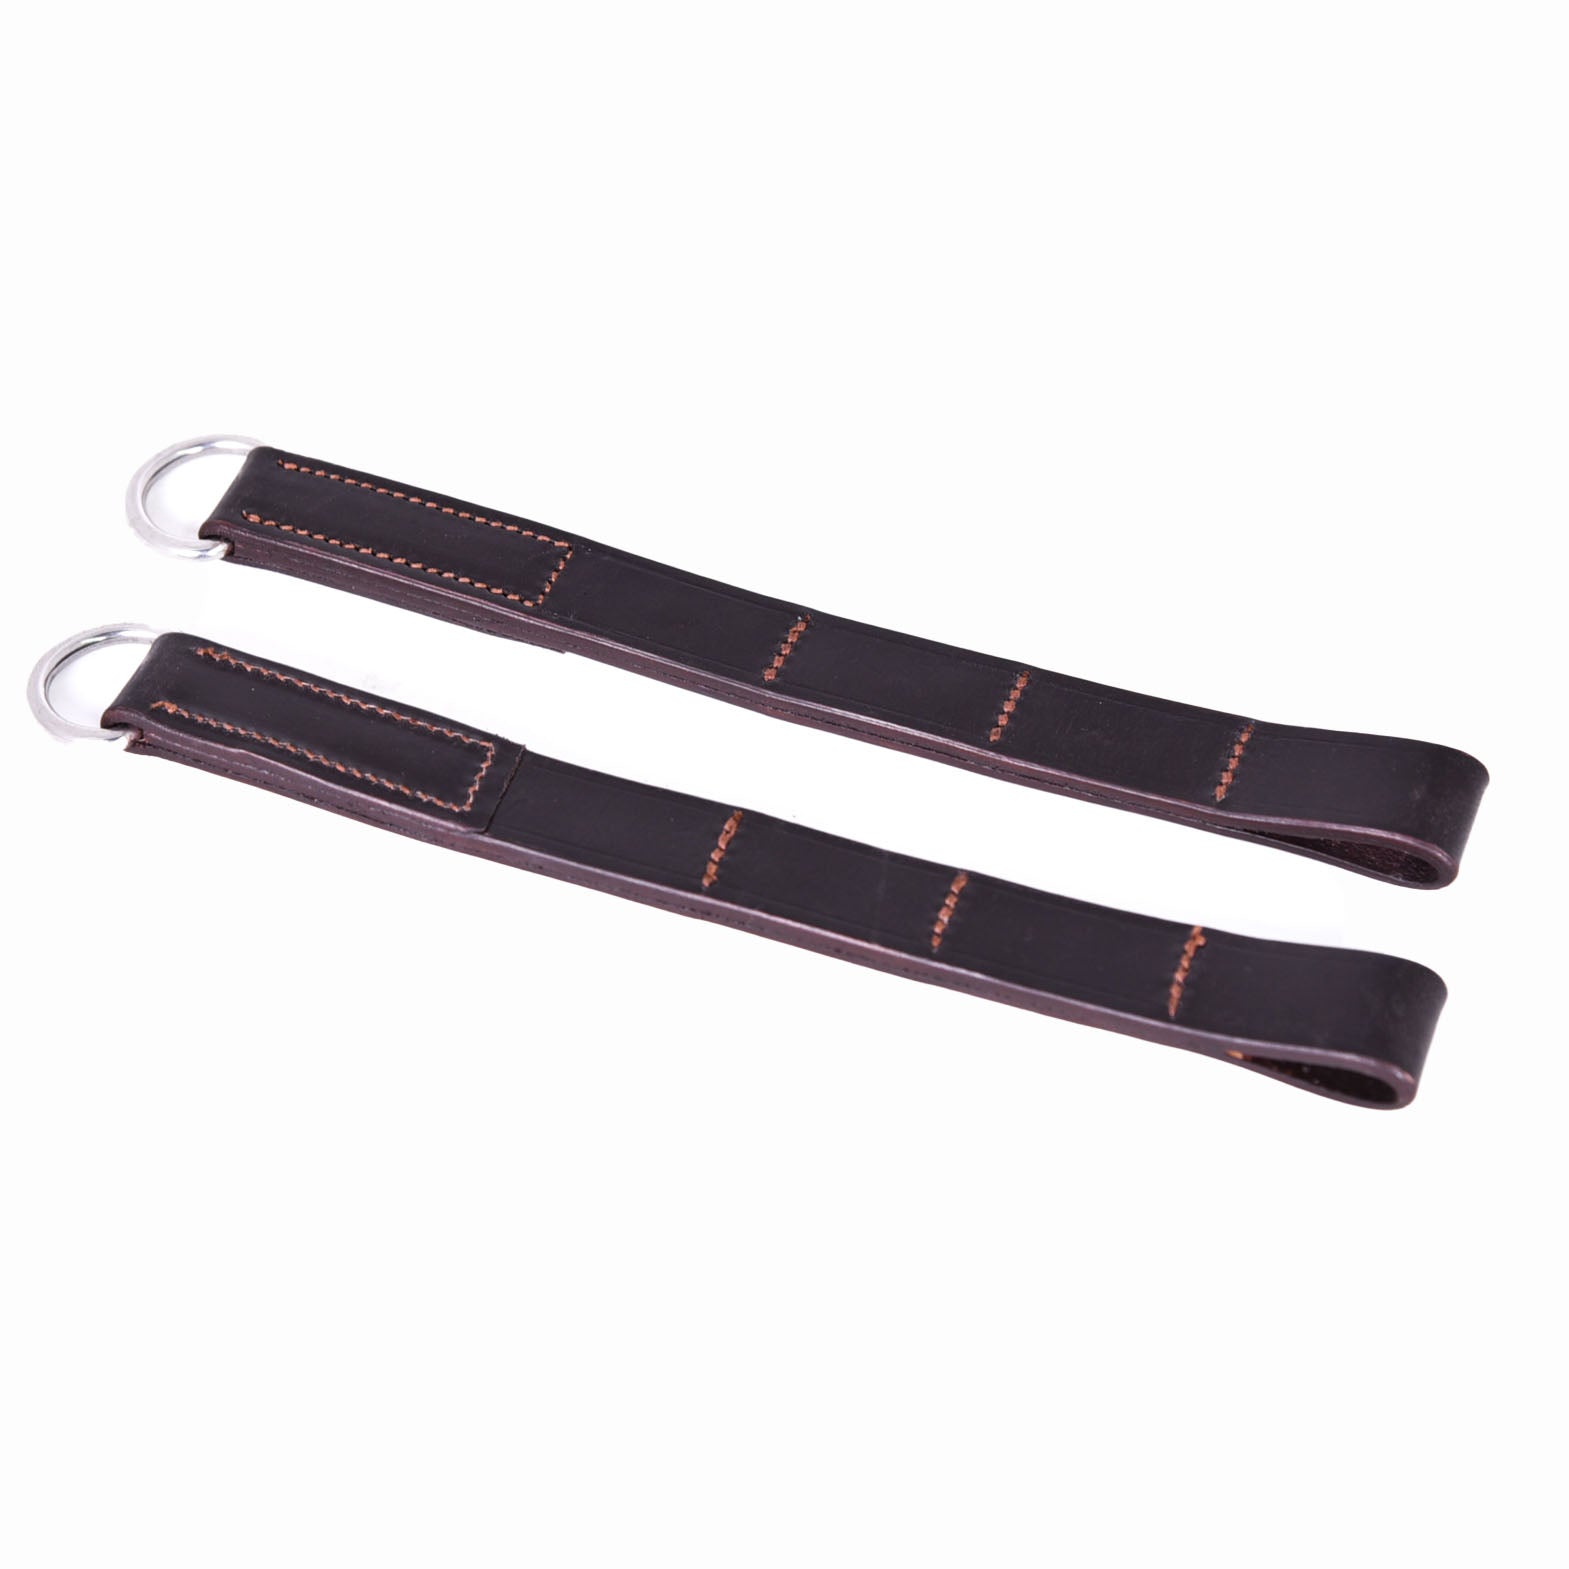 Billet Dee Extension straps